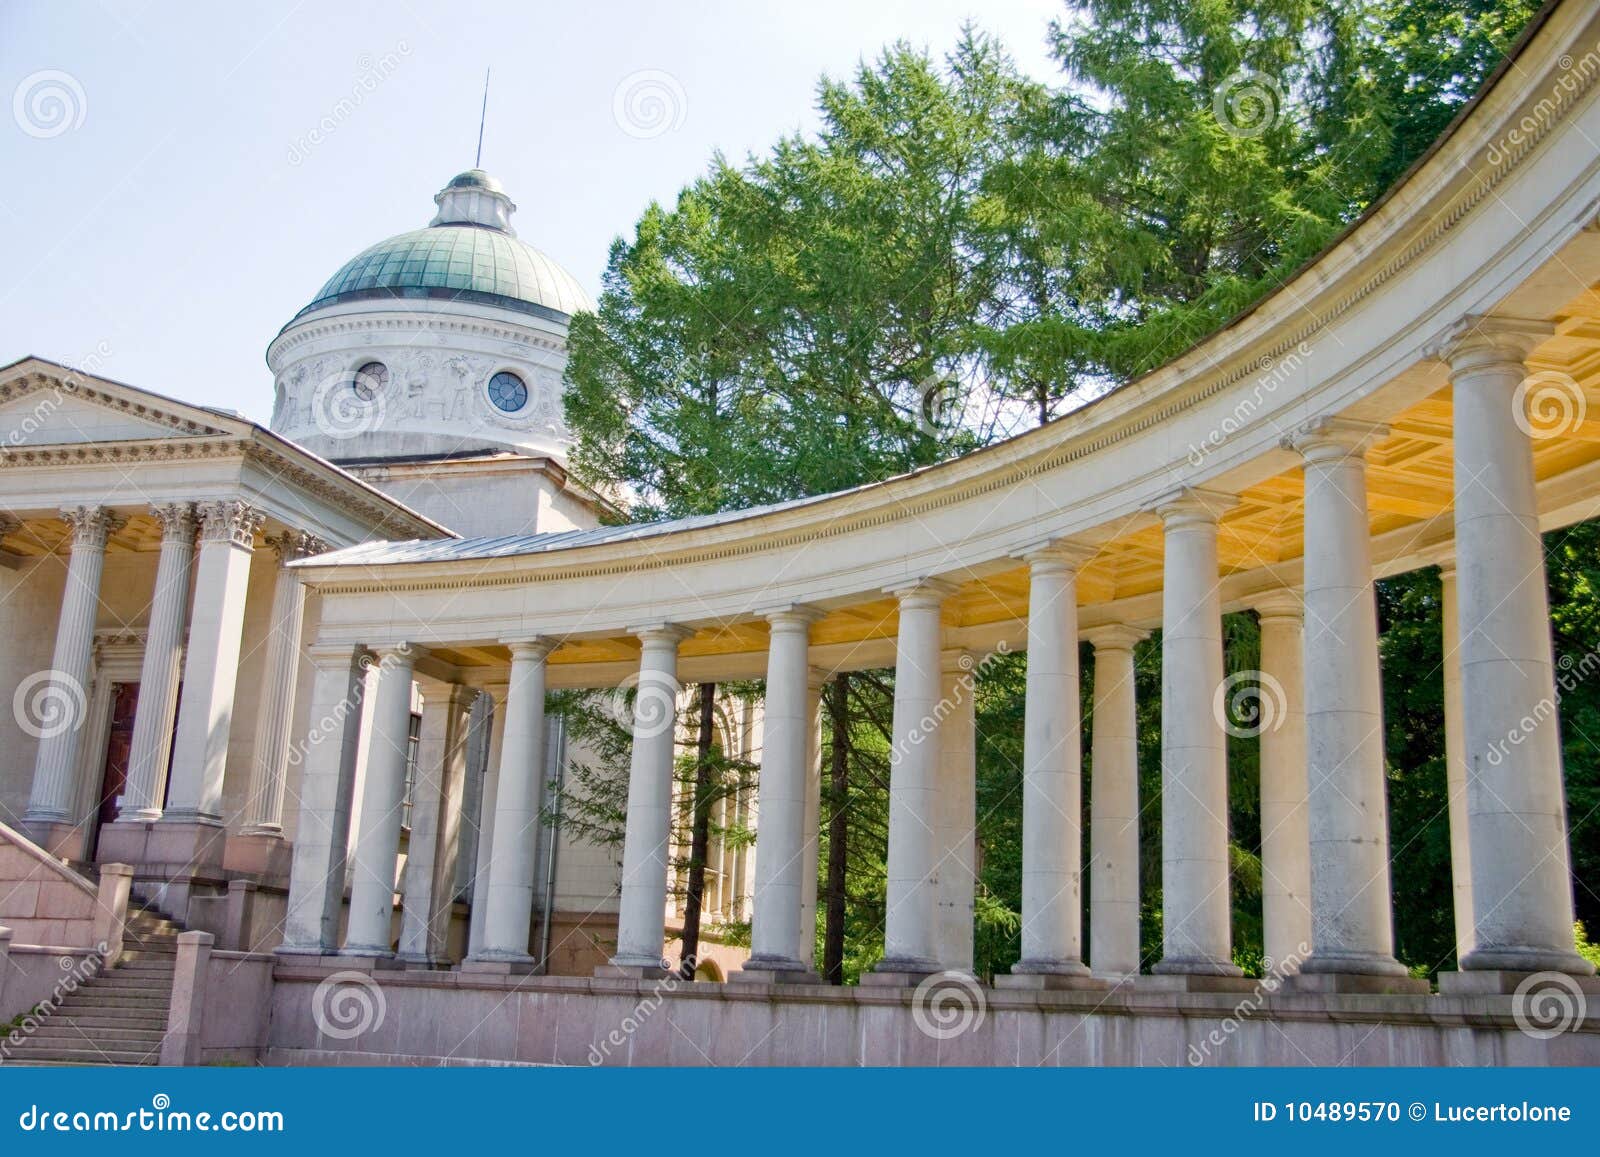 Moscow. Arkhangelskoye stock photo. Image of palace, building - 10489570